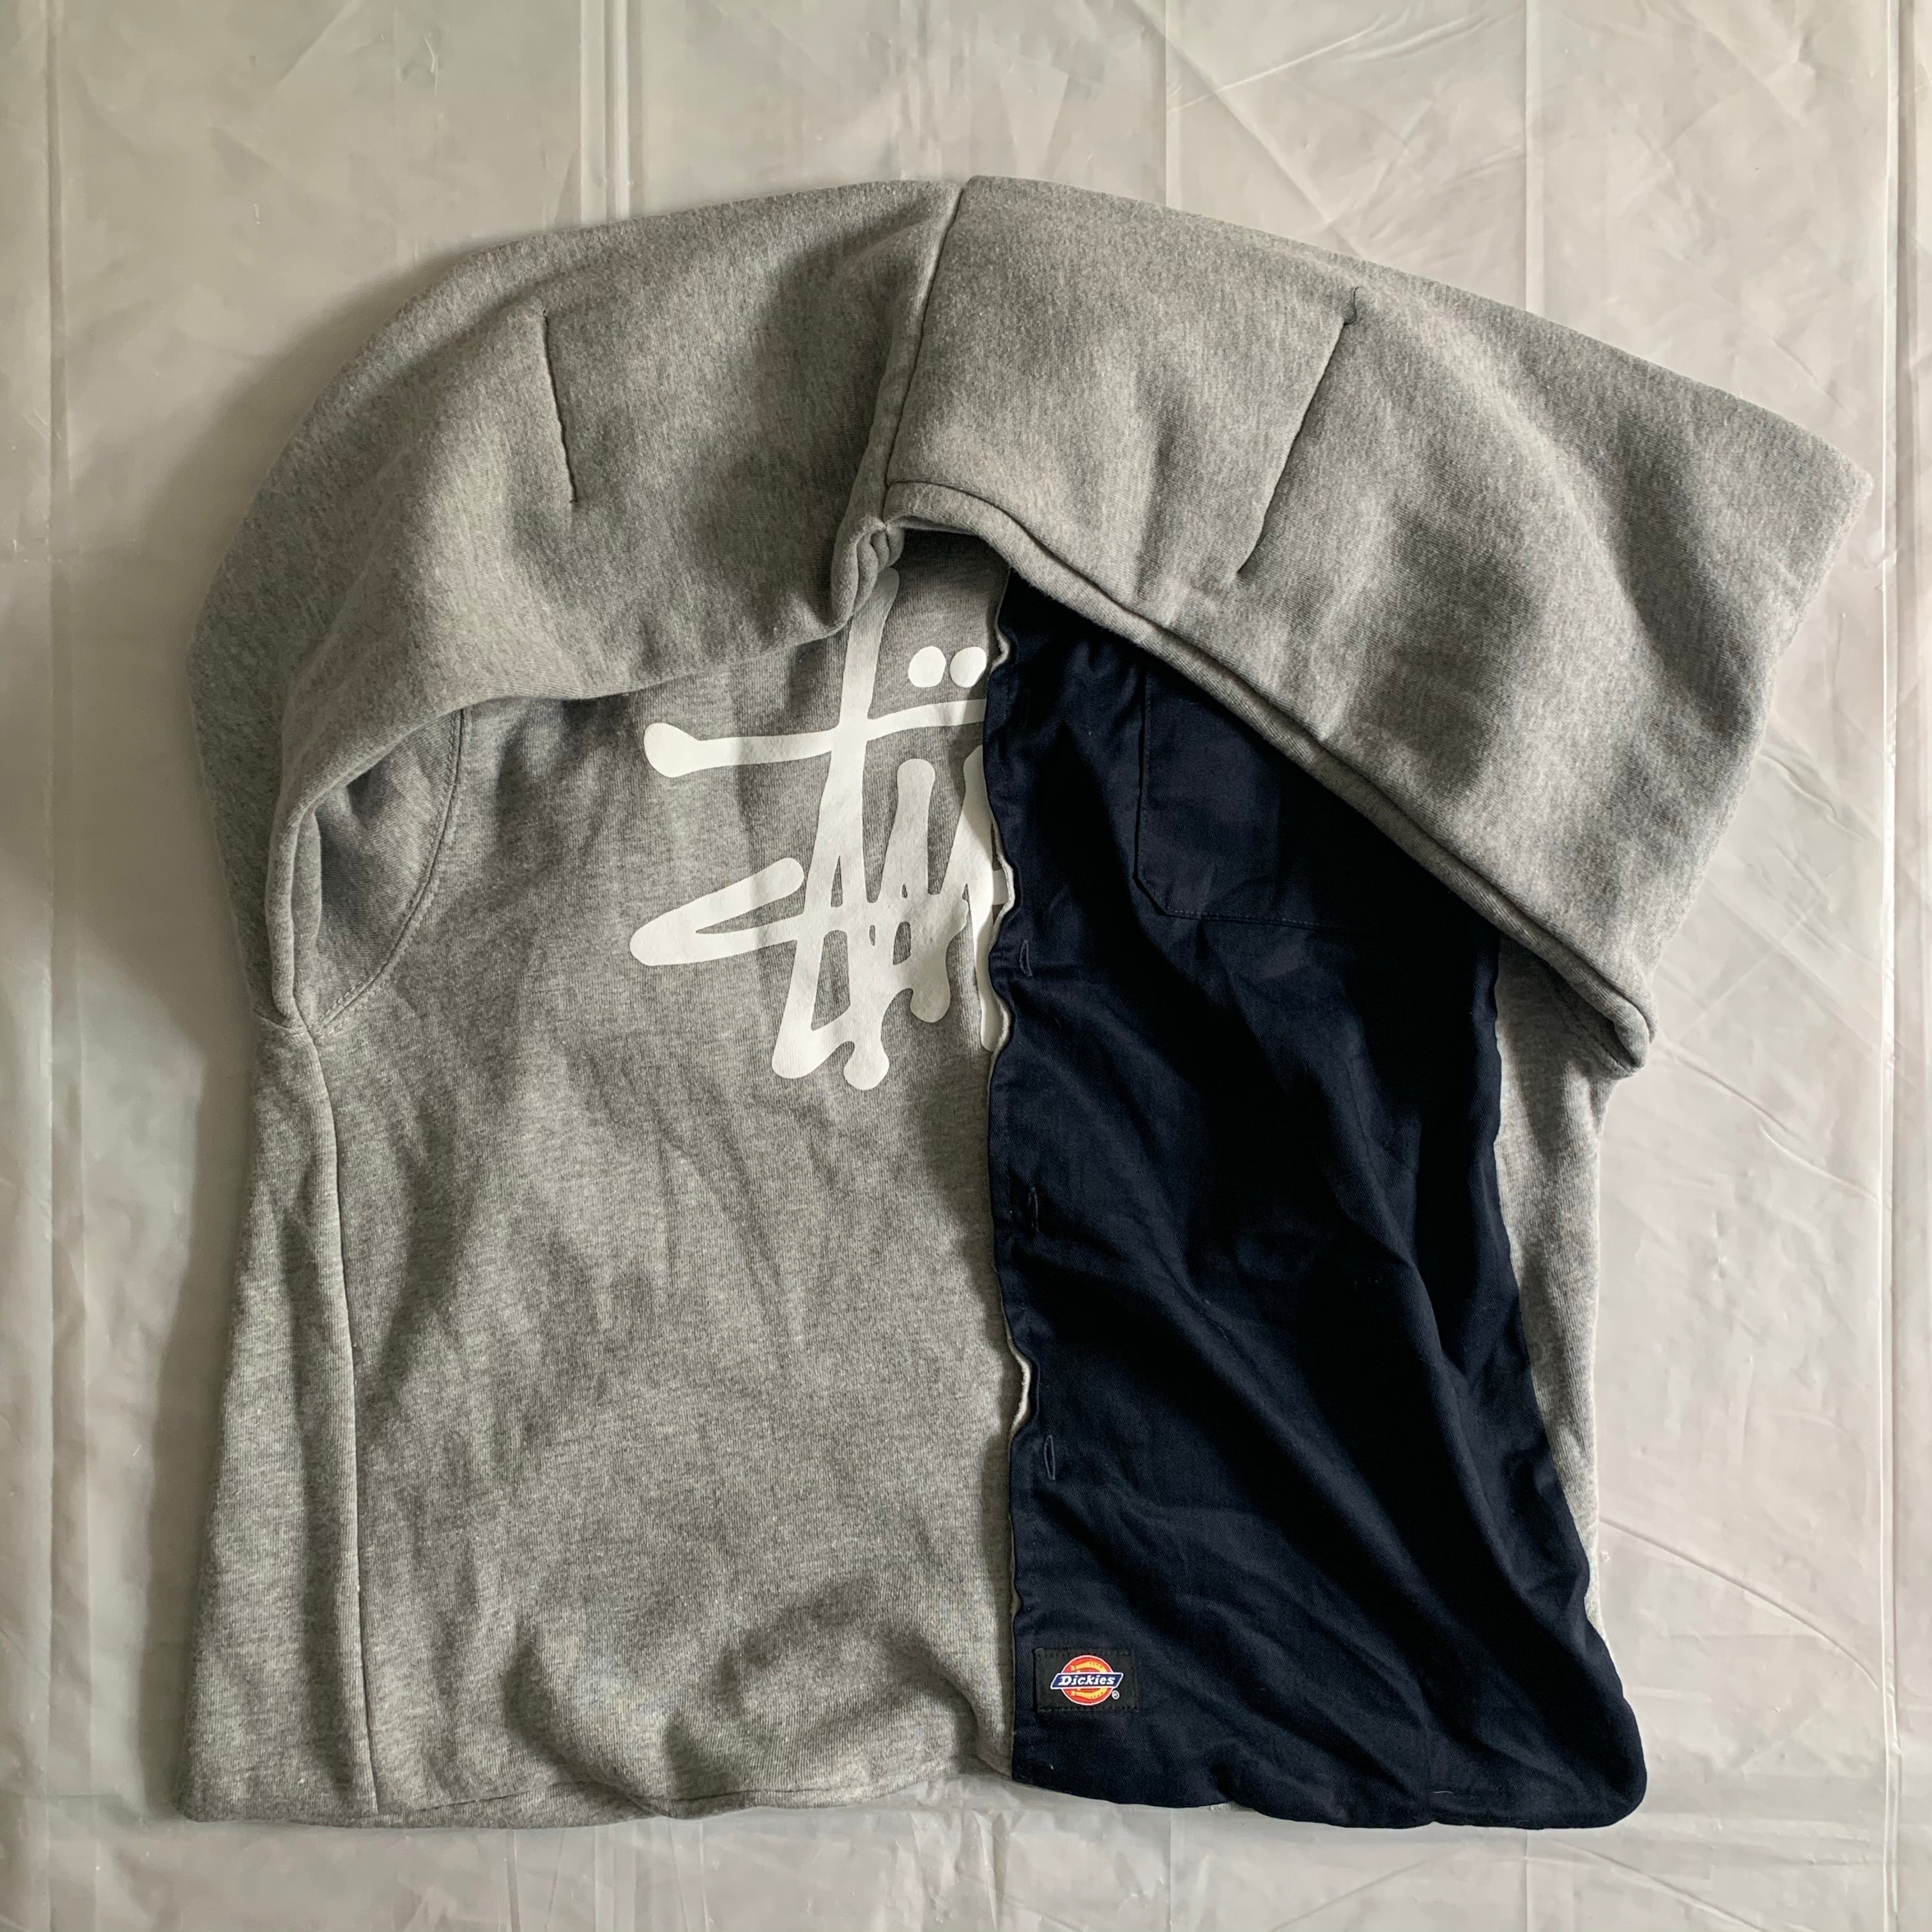 Kiko Kostadinov x Stussy x Dickies Prototype Reconstructed Sweater Bag - Size OS